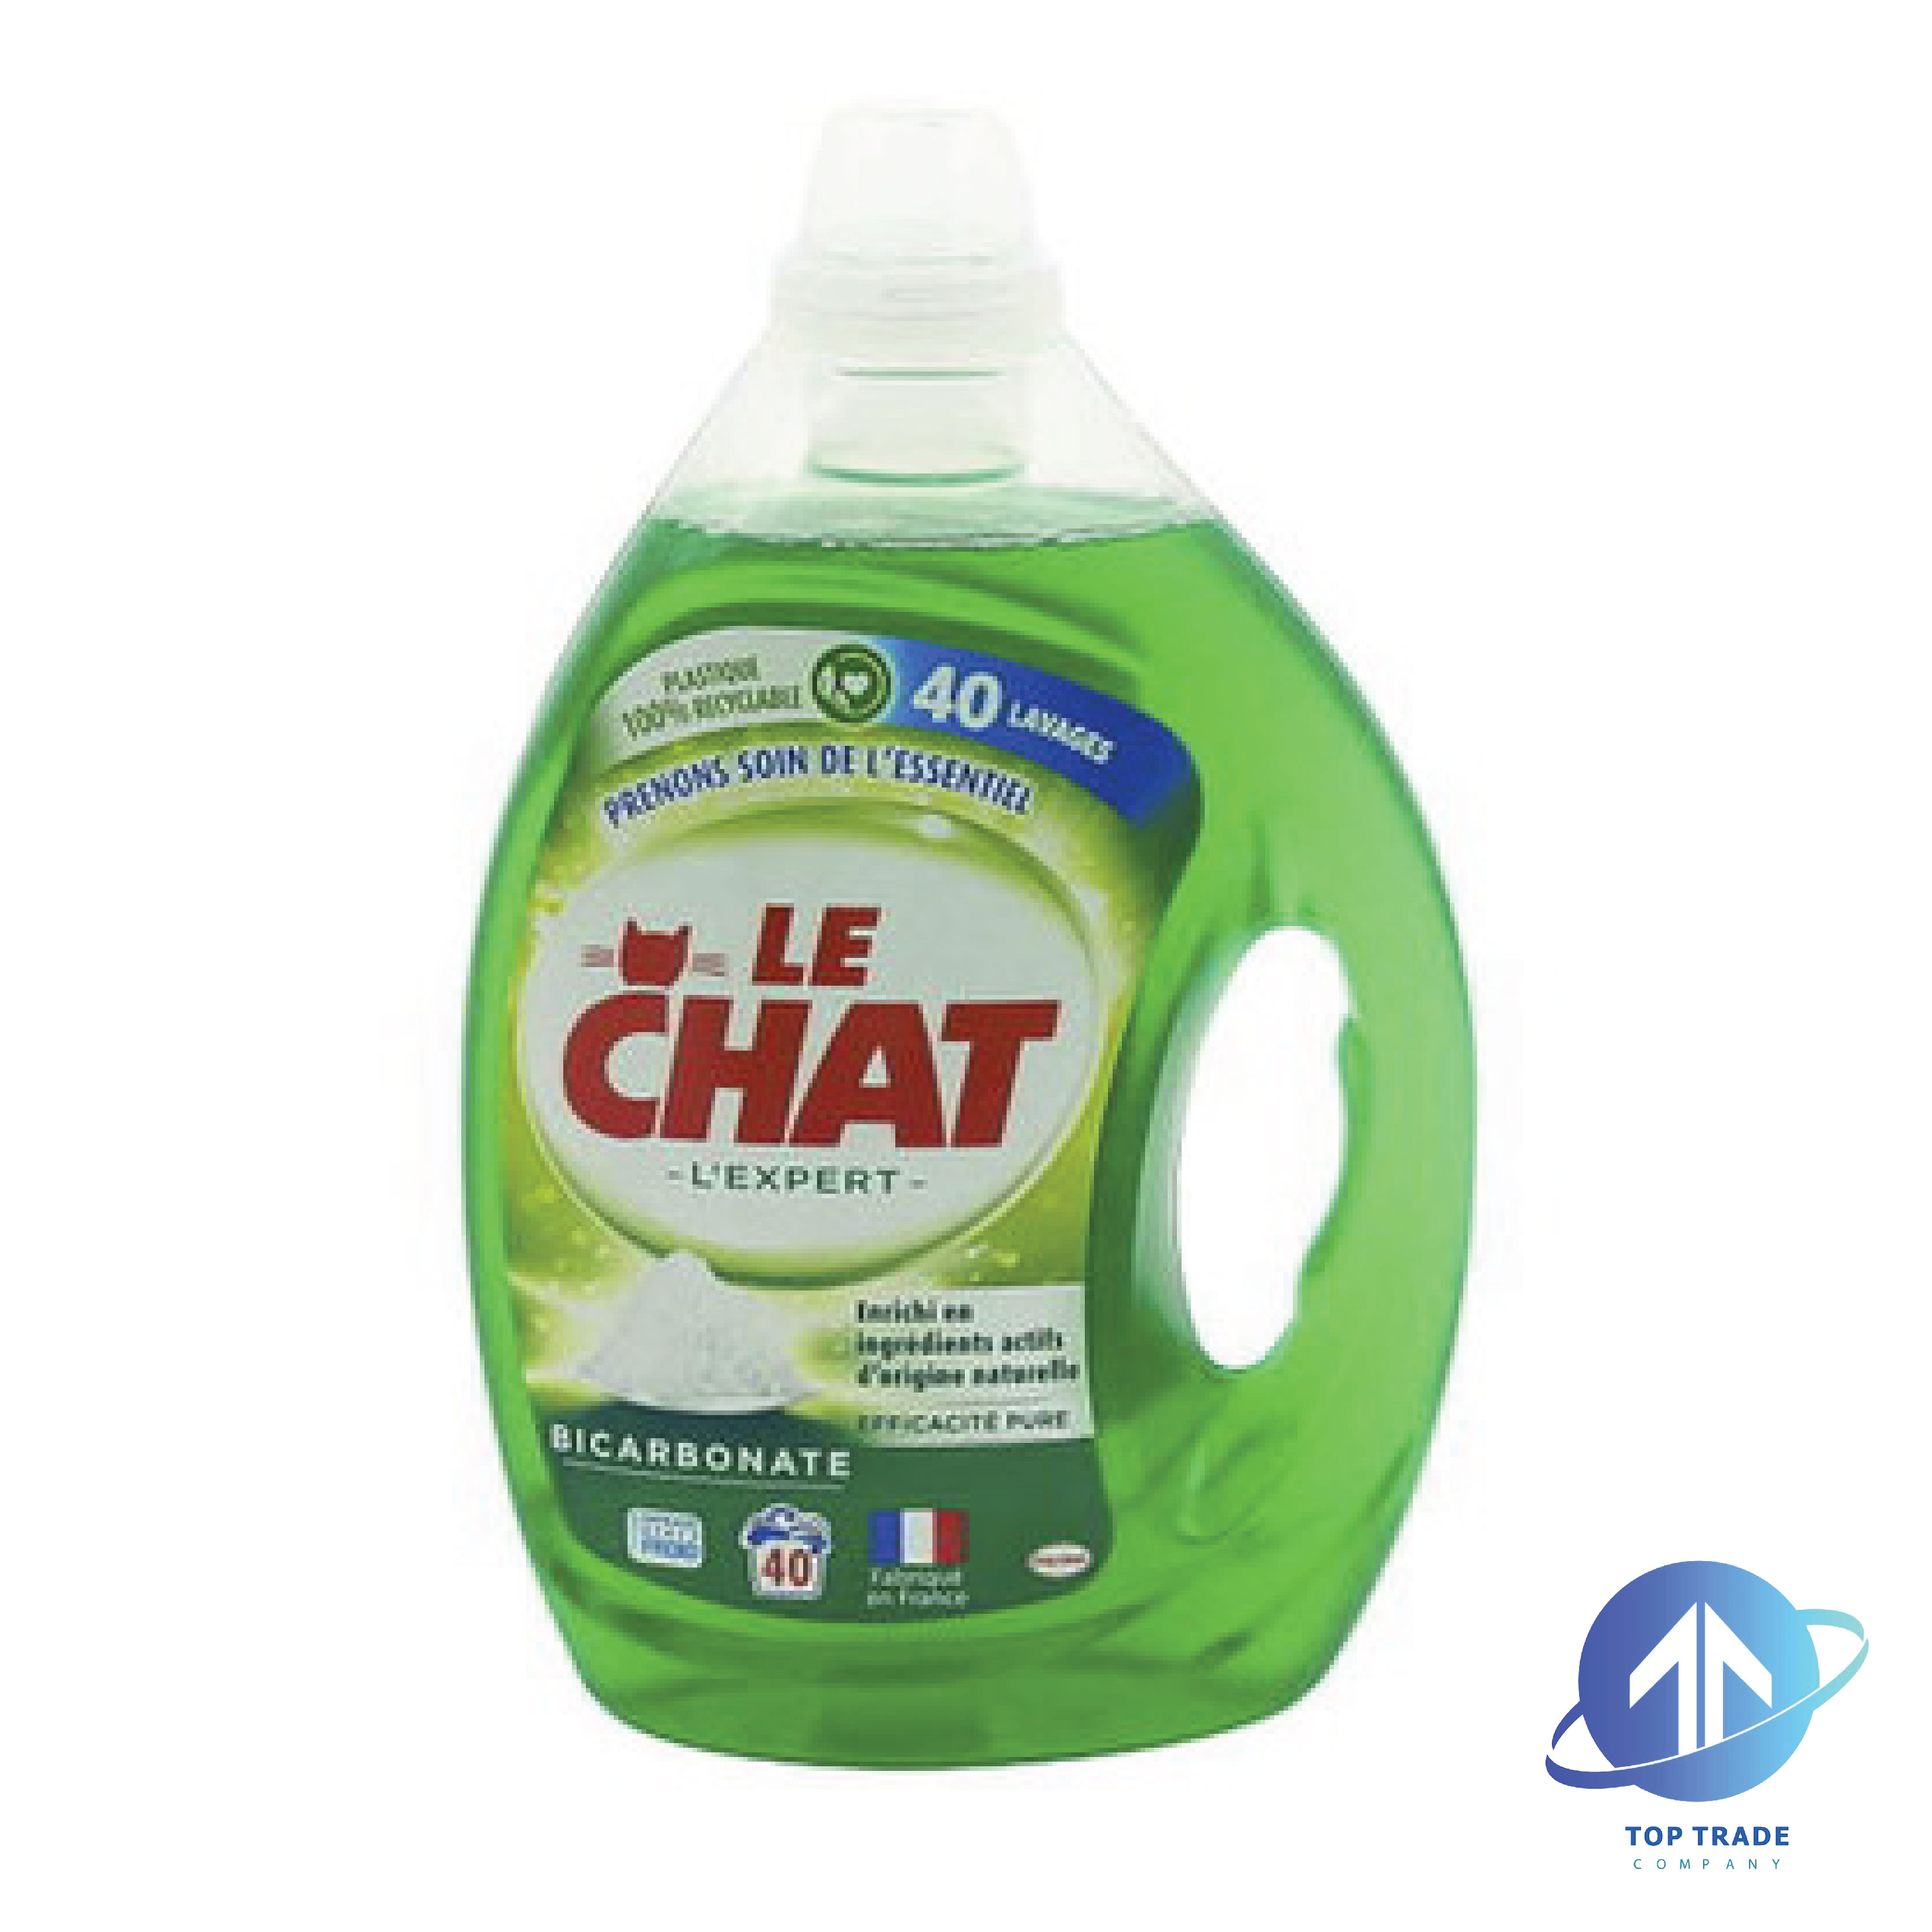 Le Chat washing liquid expert 2L/40sc